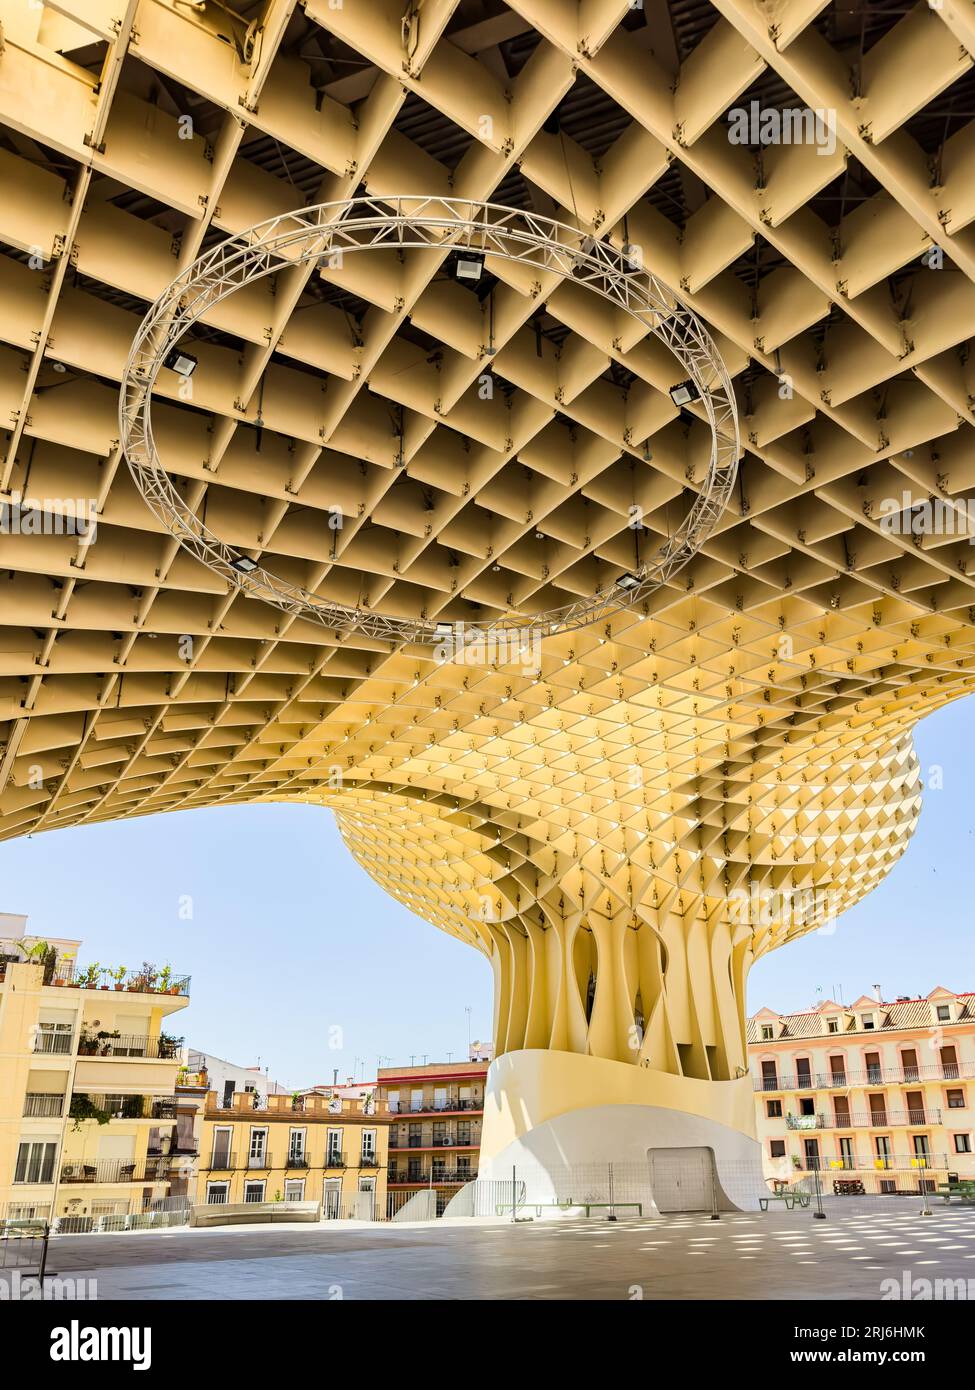 The Setas de Sevilla in the old quarter of Seville consisting of six wooden parasols resembling mushrooms. Stock Photo